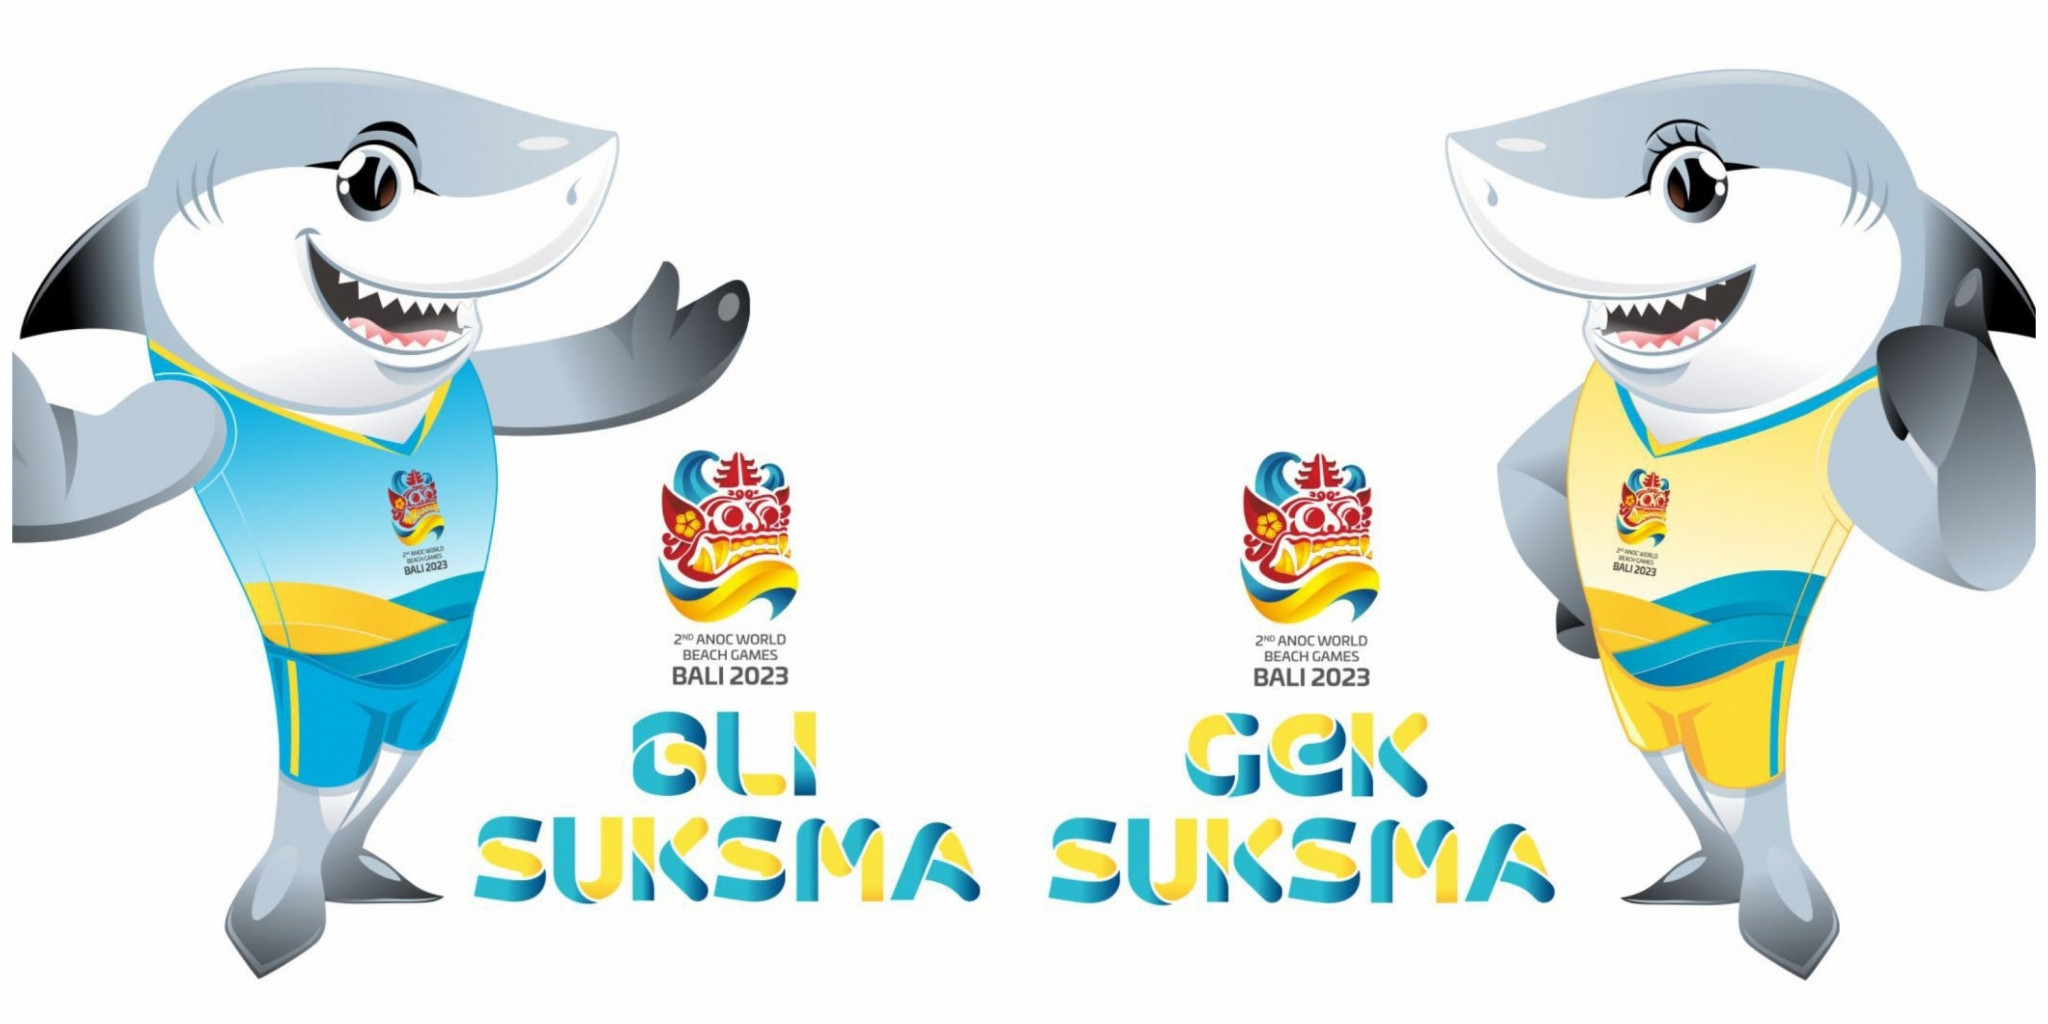 Bli Suksma, left, and Gek Suksma, right, are the official mascots for Bali 2023 ©Bali 2023